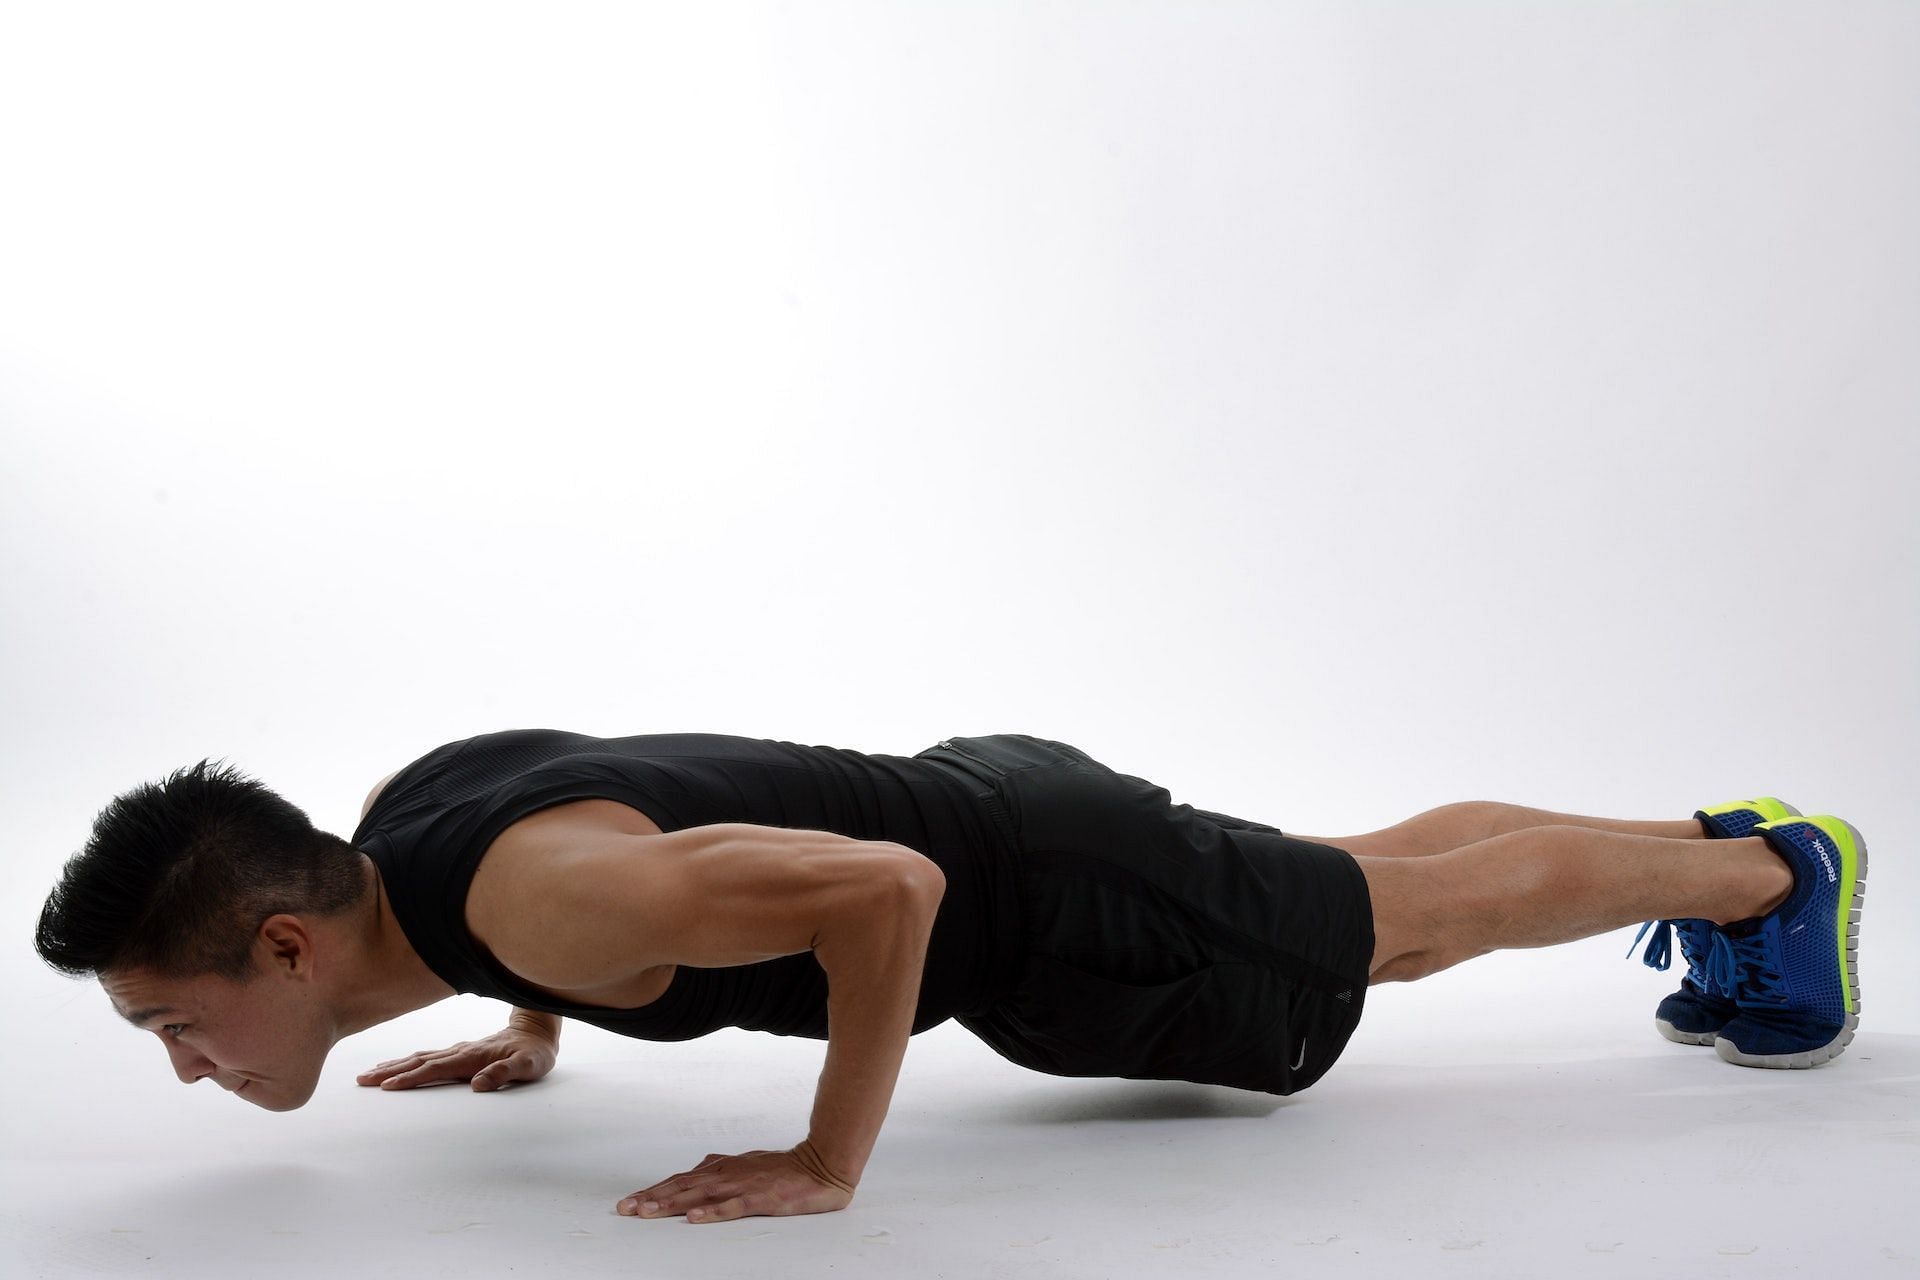 Combine with push-ups and other arm exercises for maximum gains. (Photo via Pexels/Keiji Yoshiki)